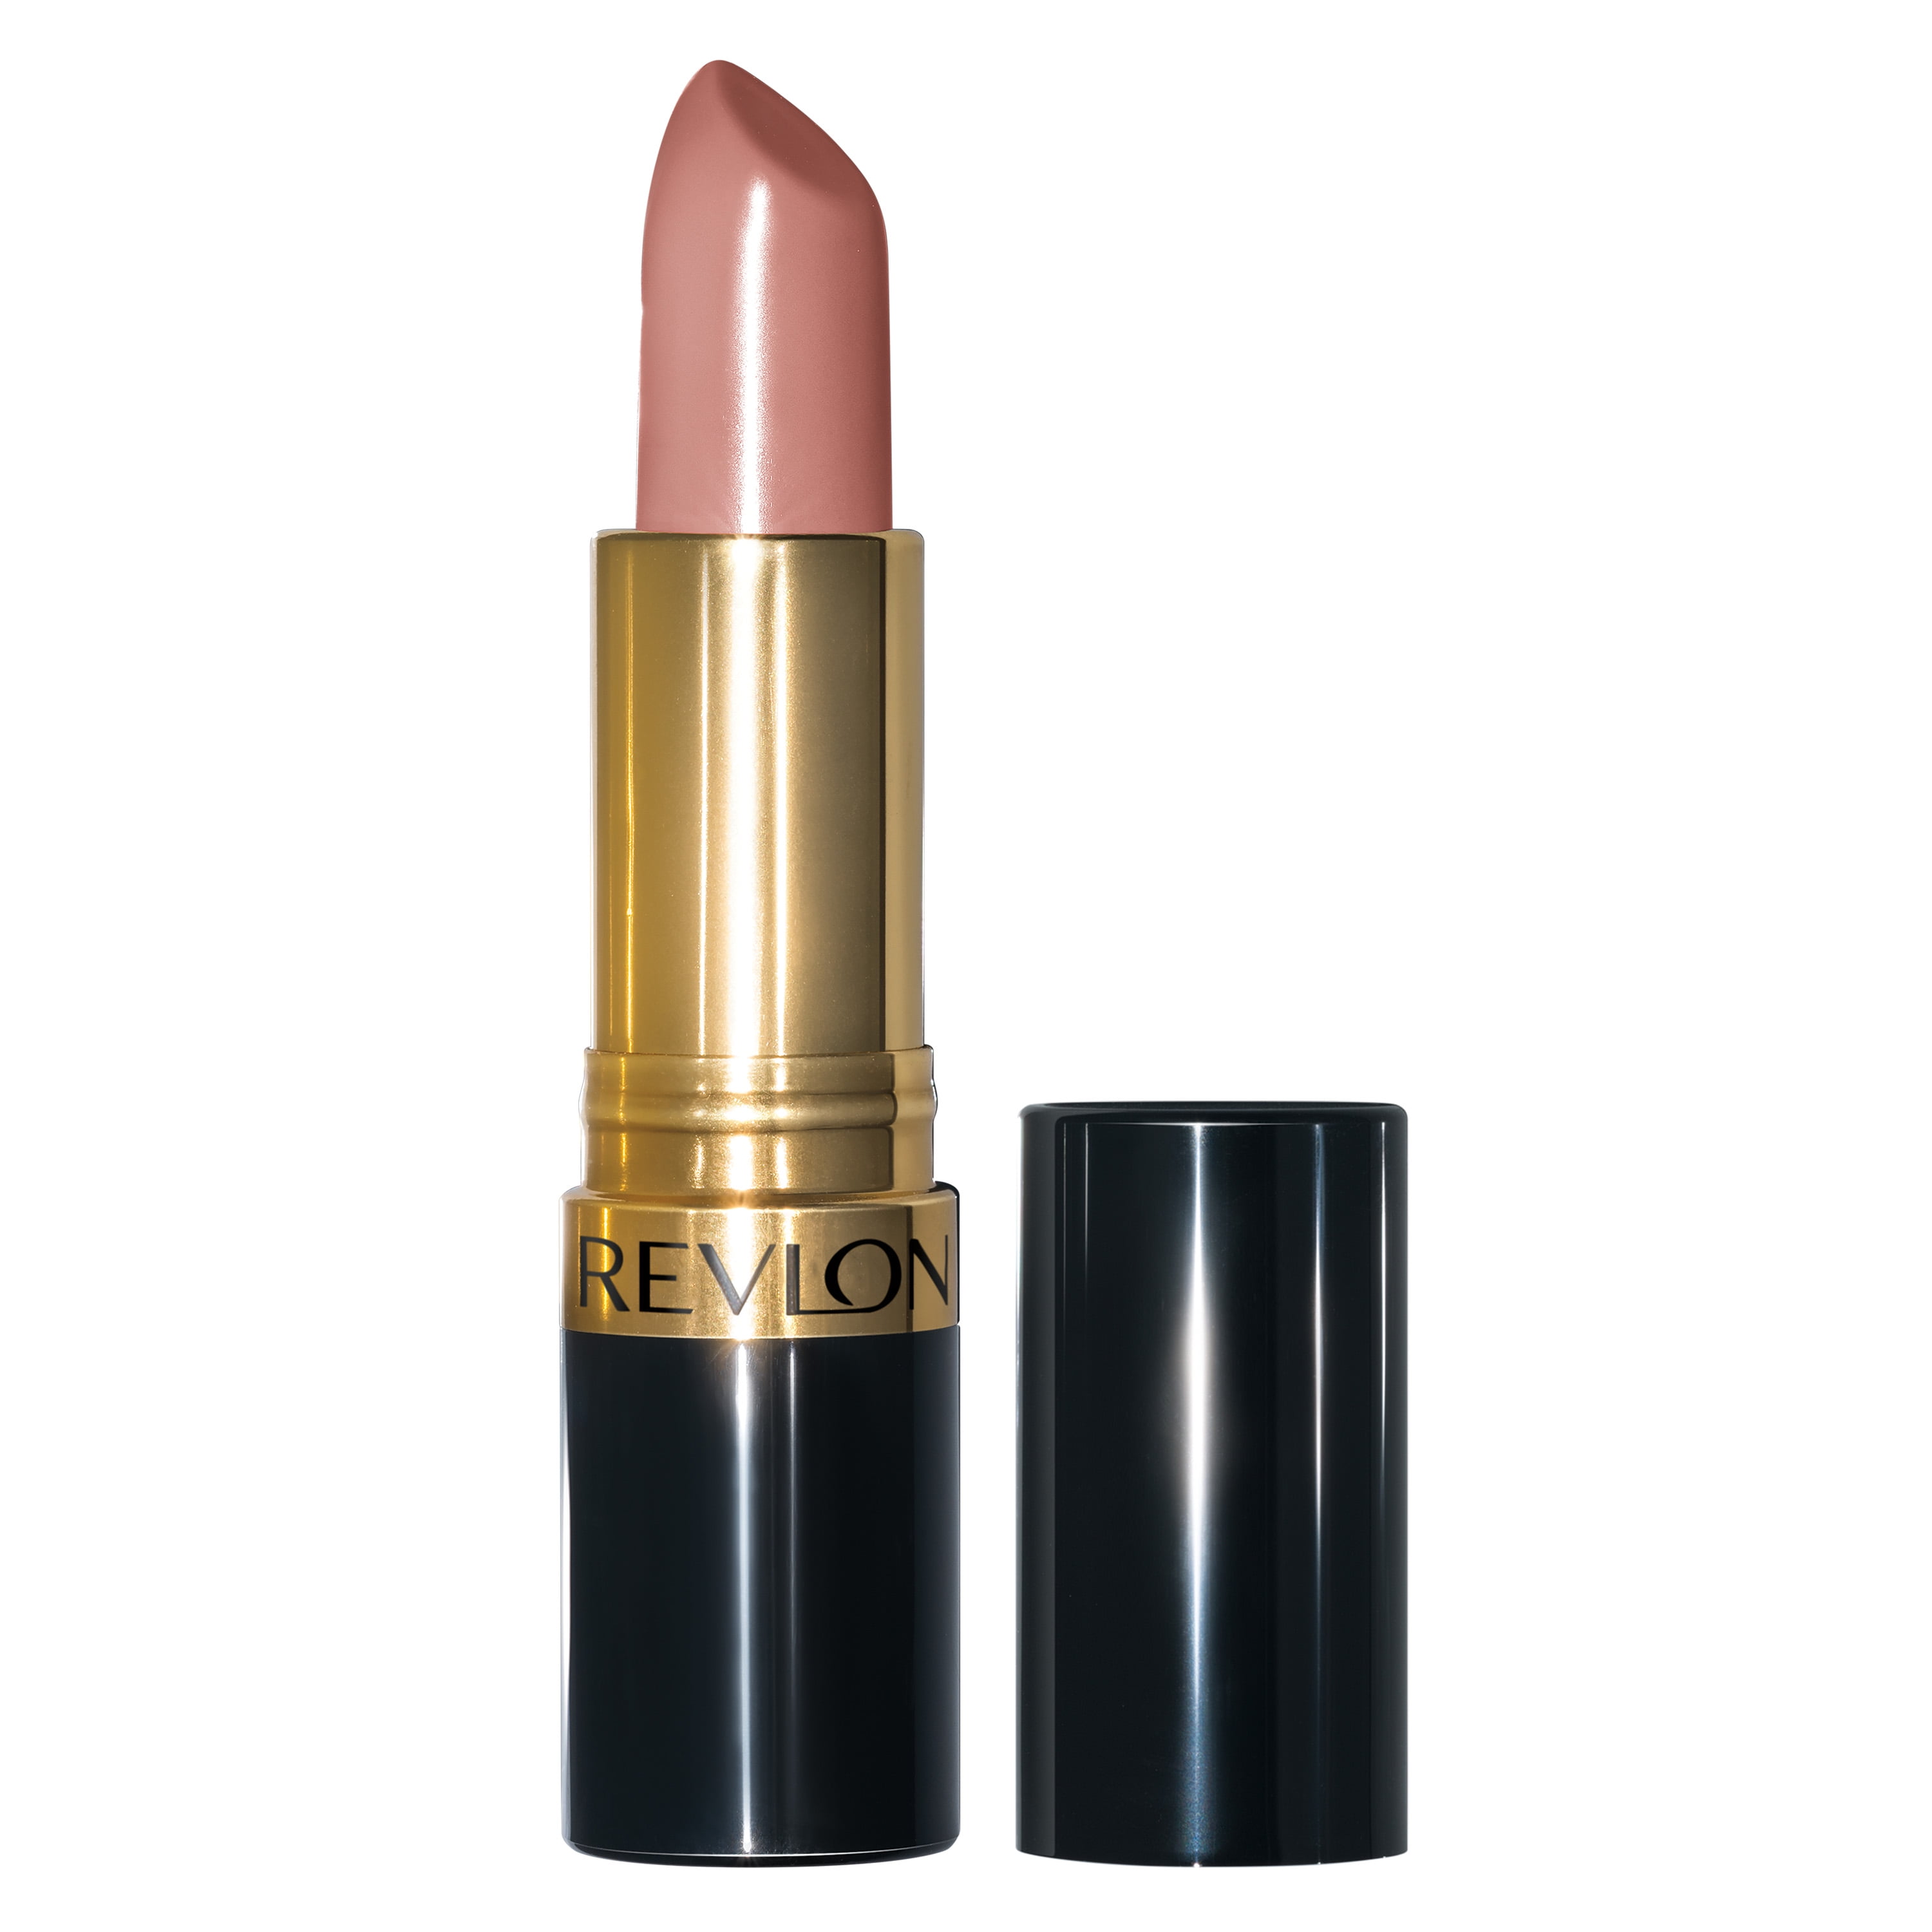 Revlon Super Lustrous Lipstick, Cream Finish, High Impact Lipcolor with Moisturizing Creamy Formula, Infused with Vitamin E and Avocado Oil, 672 Brazilian Tan, 0.15 oz